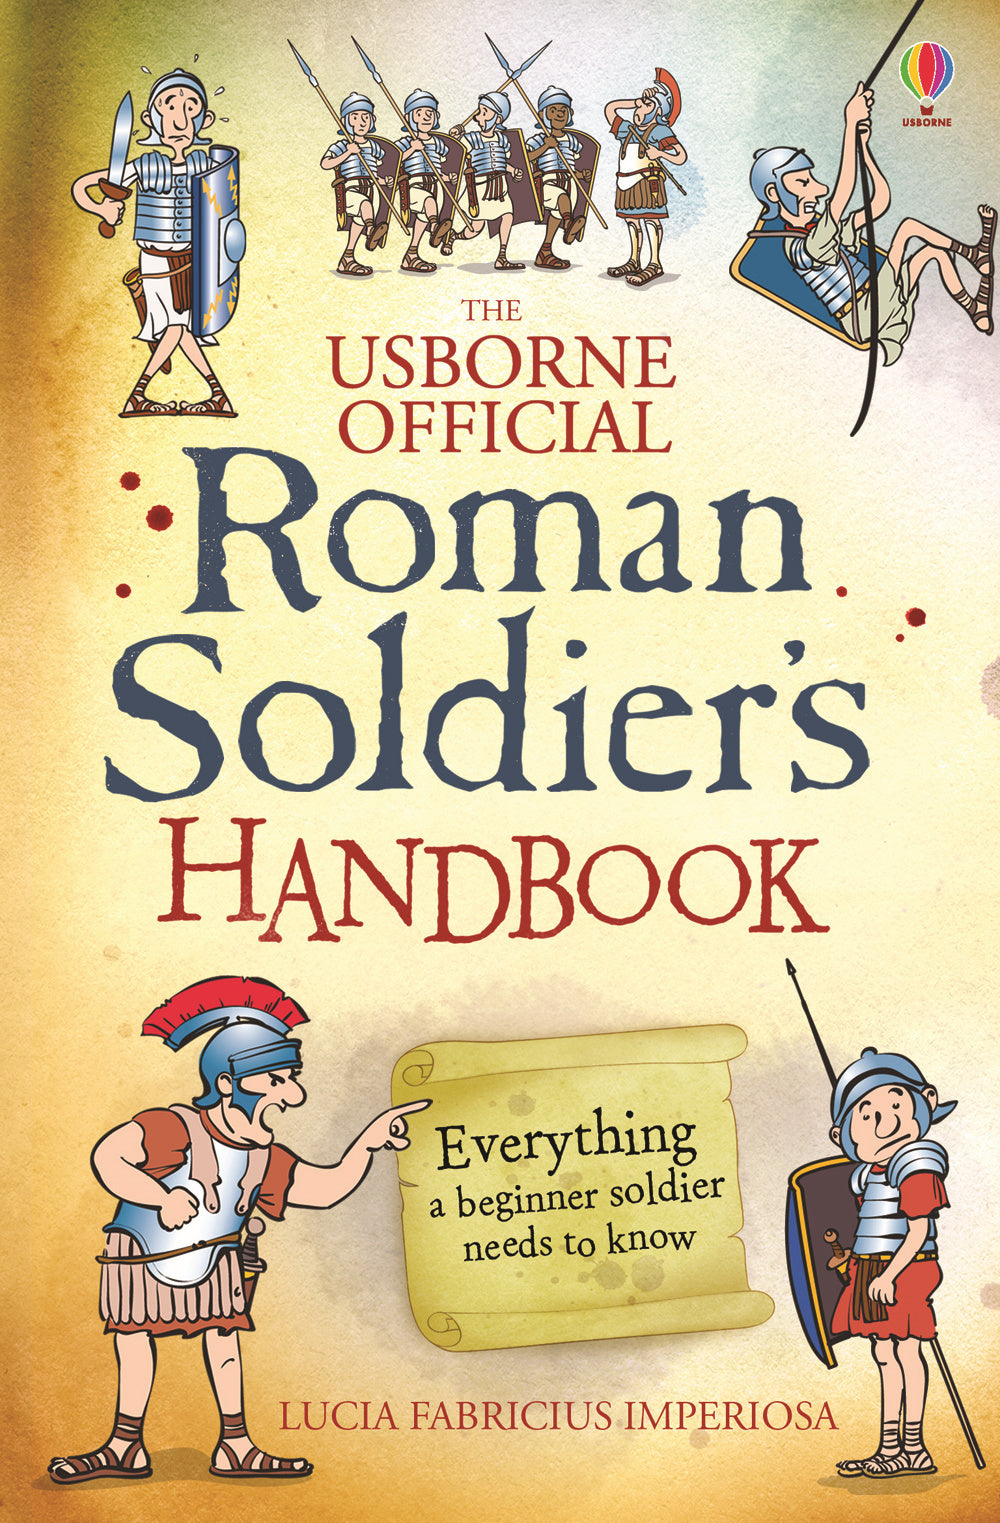 Roman soldier's handbook.